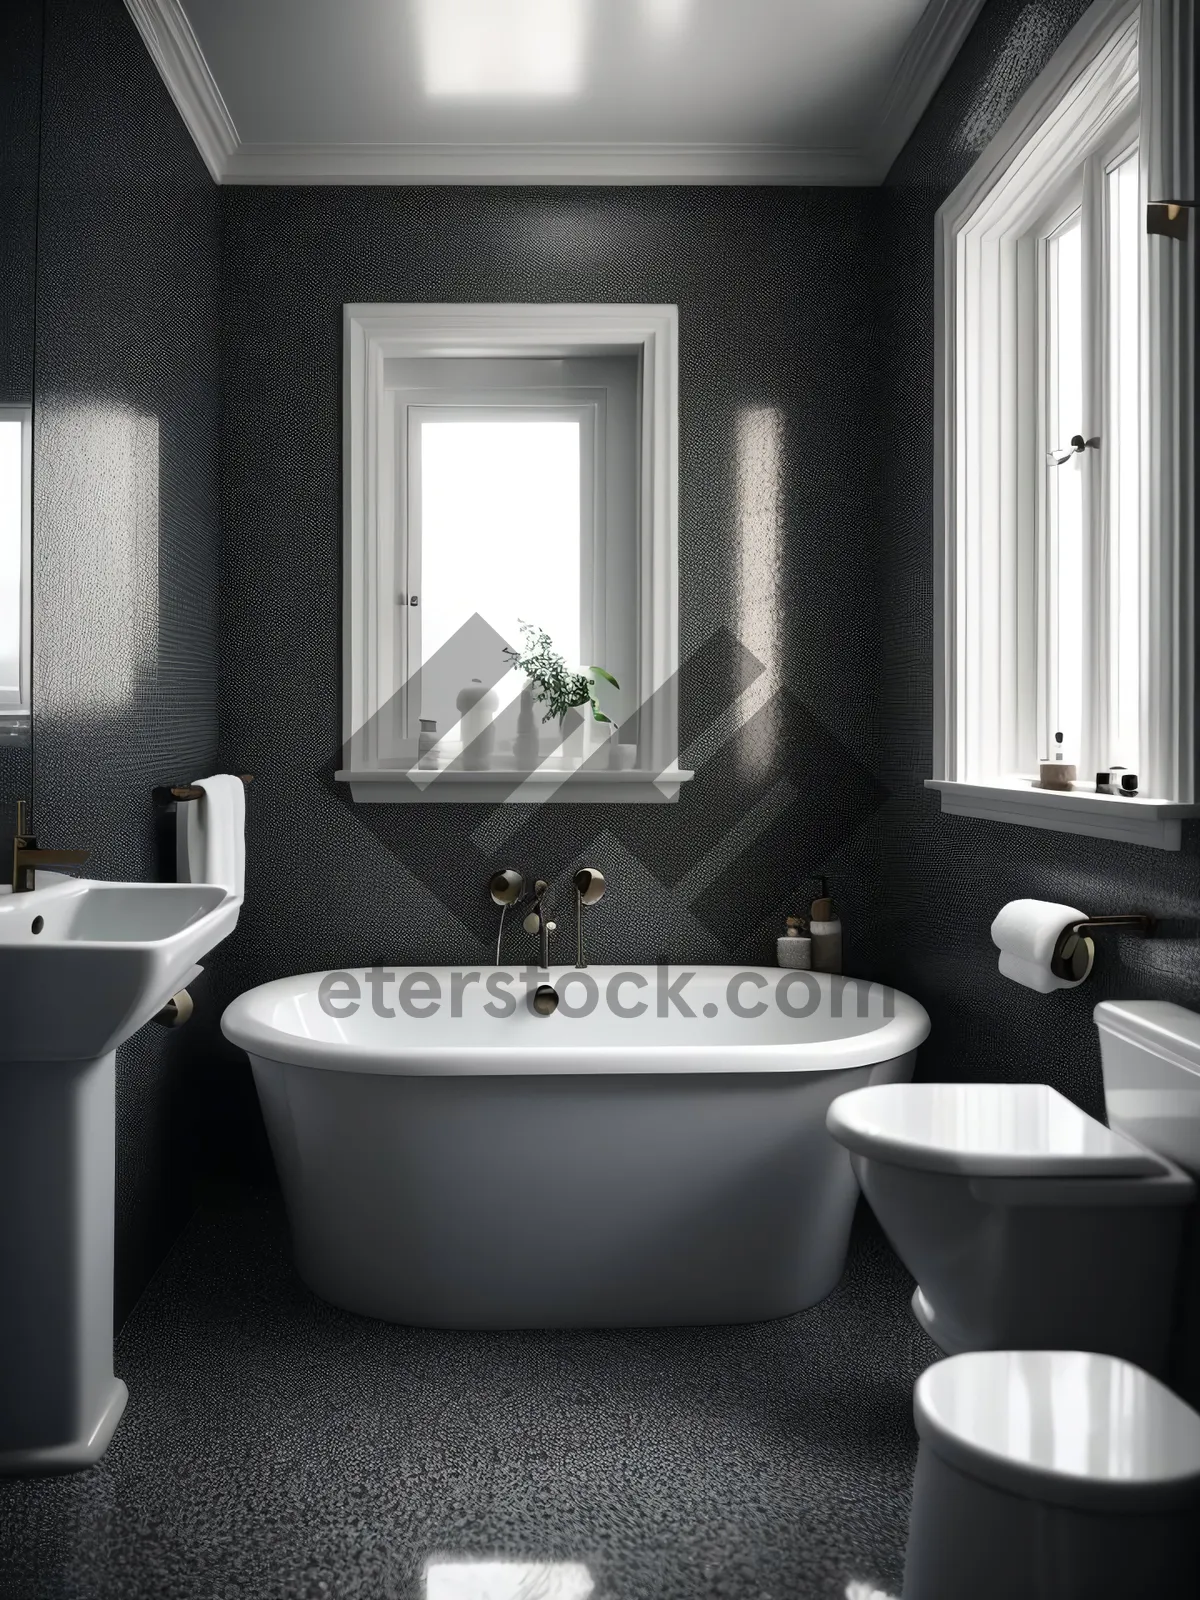 Picture of Modern Luxury Bathroom with Elegant Design